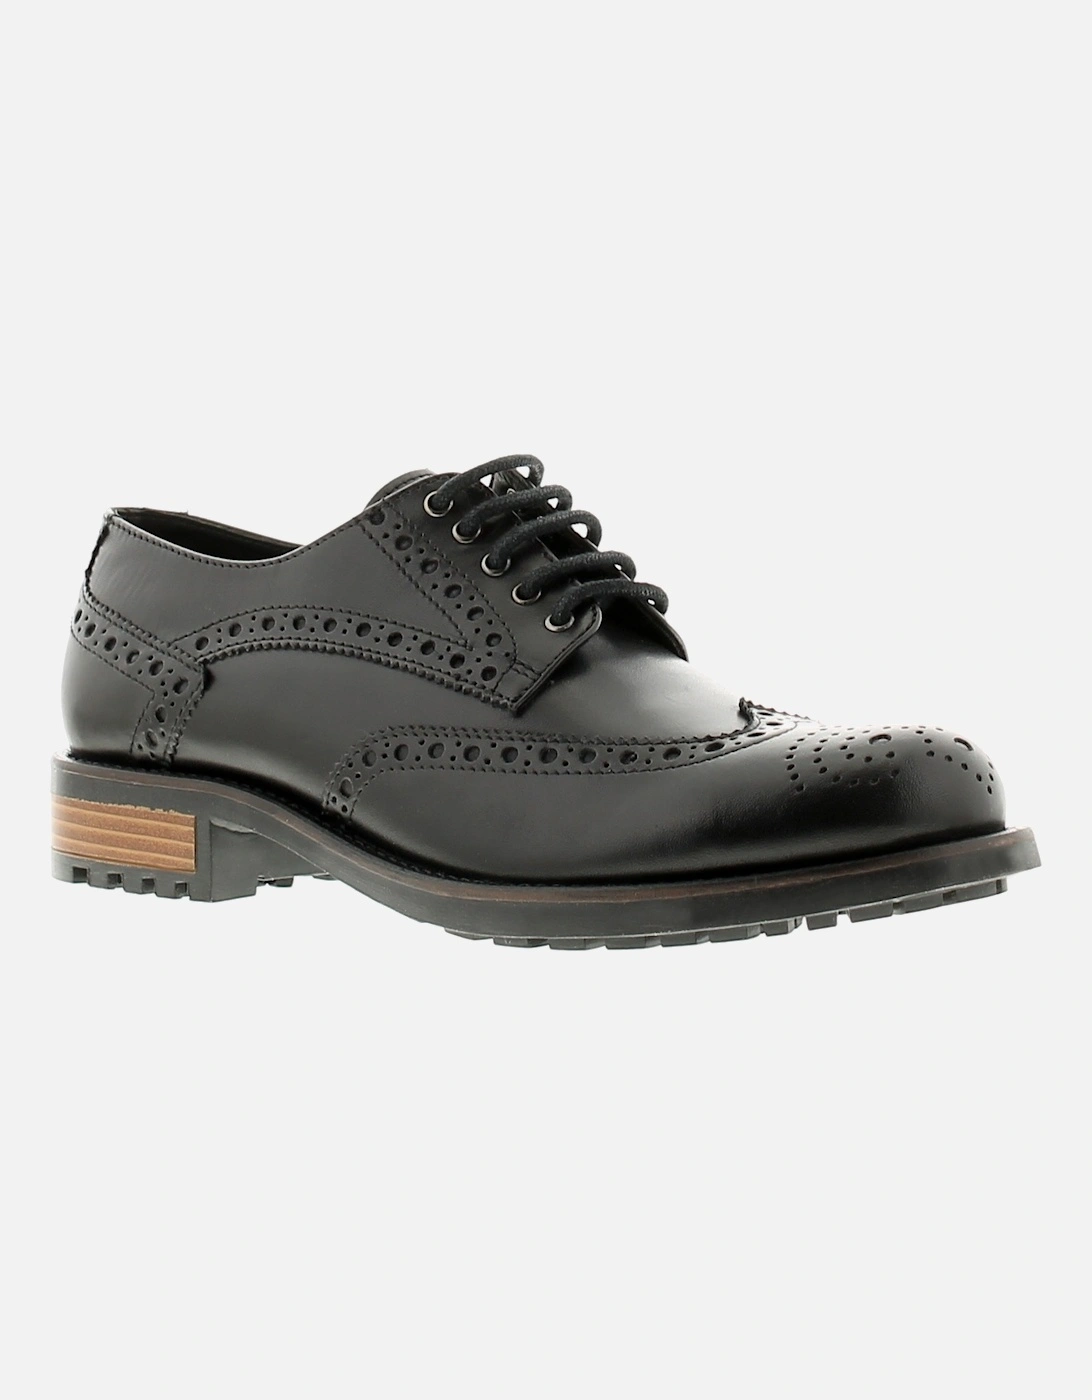 Mens Smart Shoes danish leather Lace Up black UK Size, 6 of 5